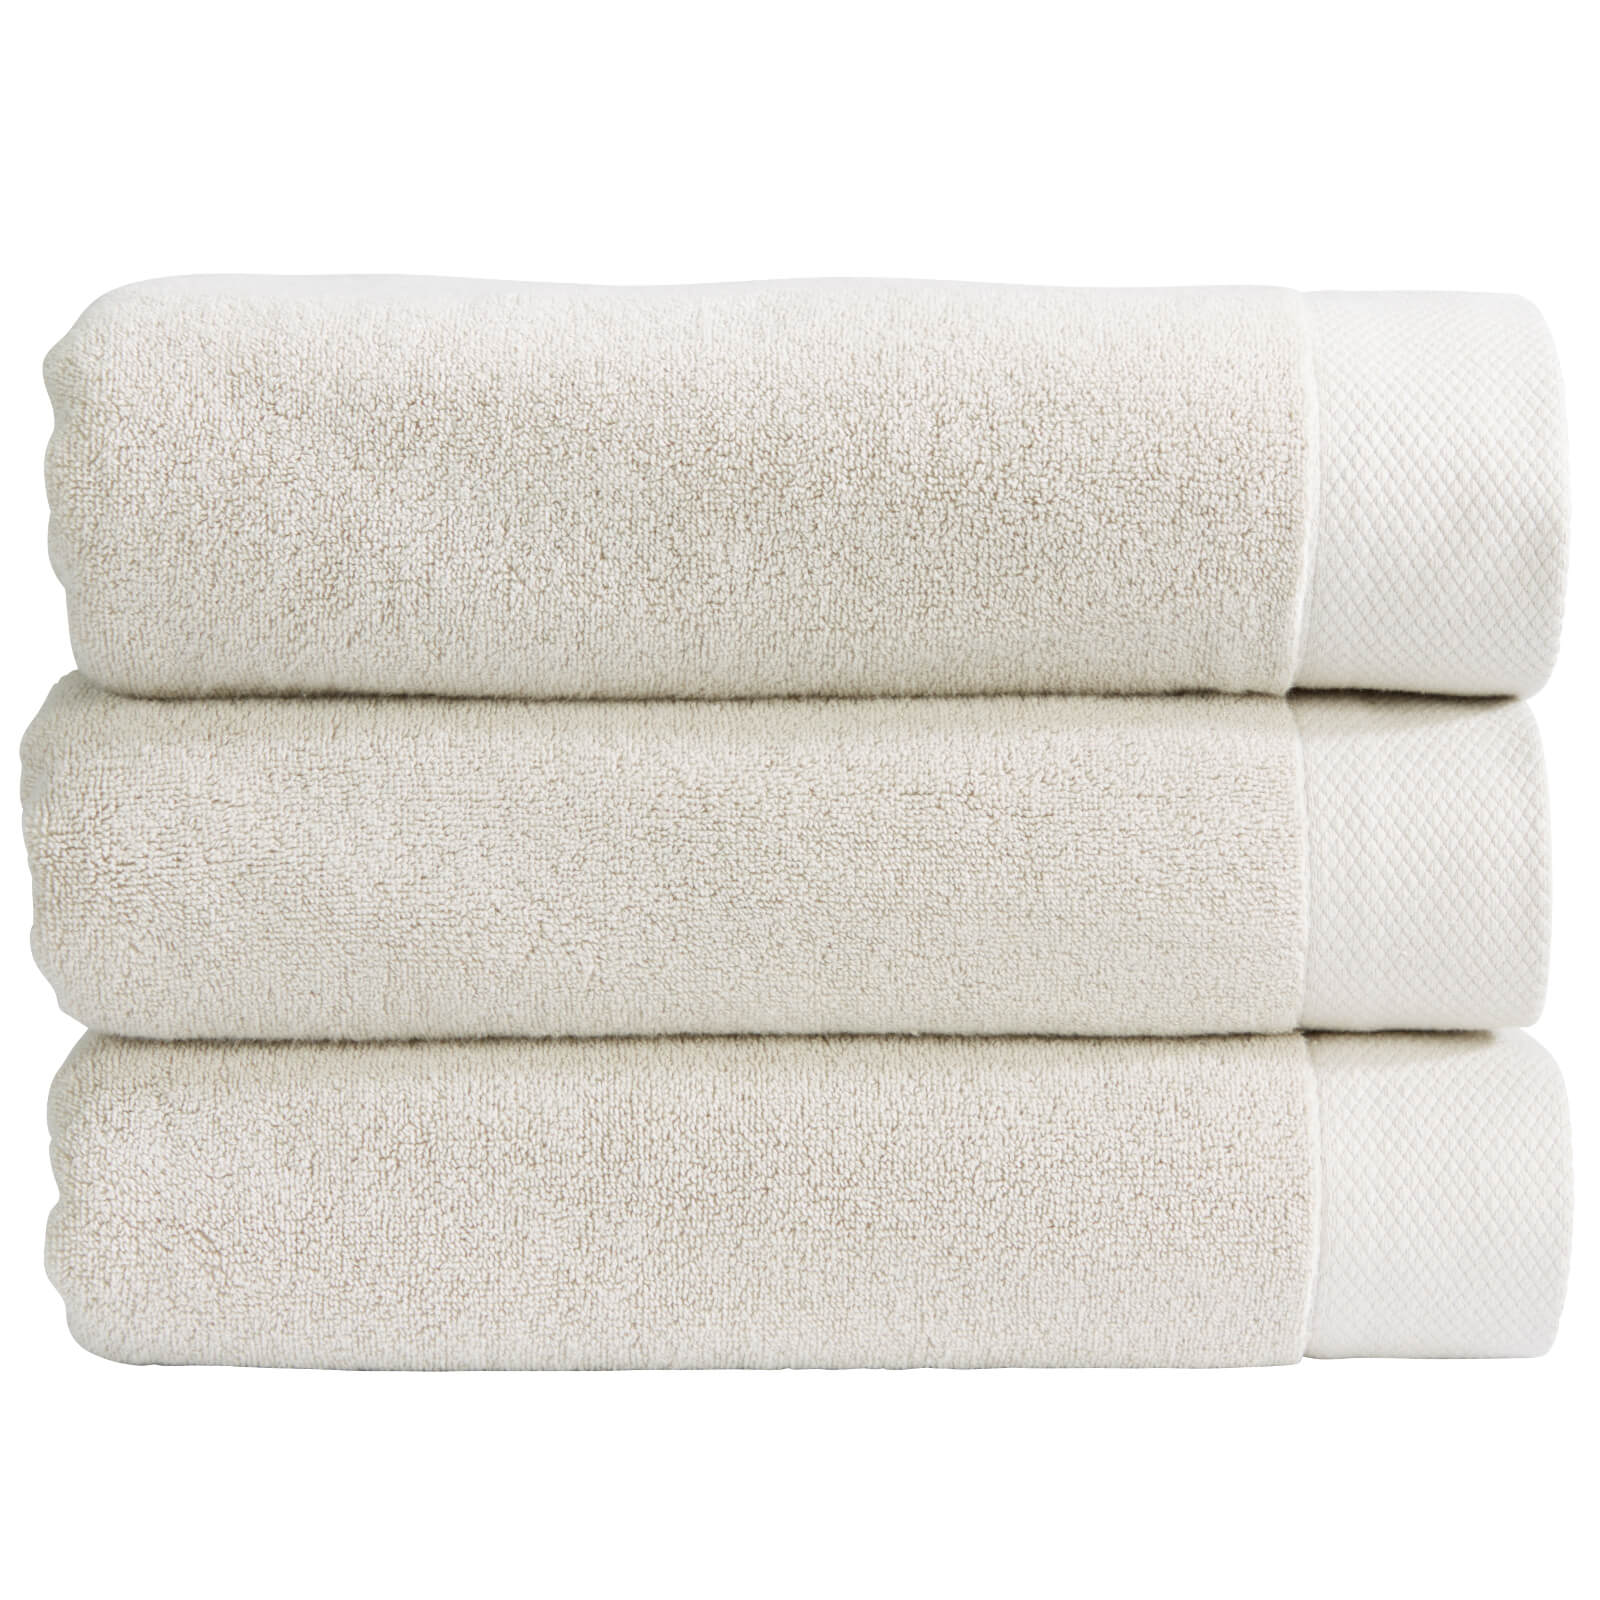 Christy Luxe Towel Range - French Grey - Bath Towel (Set of 2) - Grey